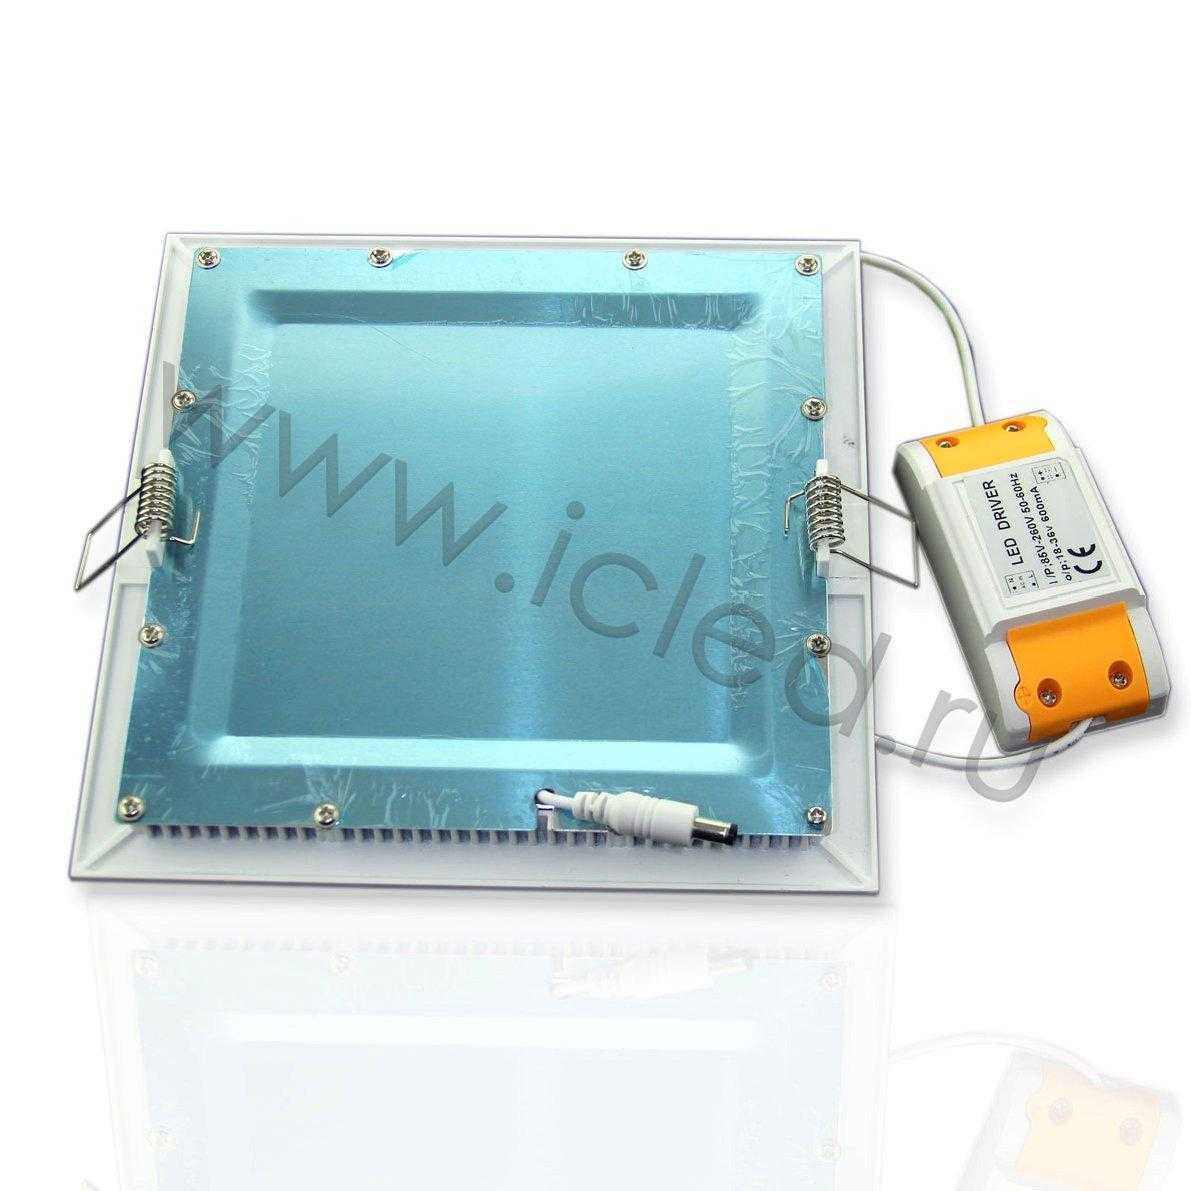 Светодиодные светильники Светодиодный светильник встраиваемый IC-SW200 B83 (220V, 15W, warm white)